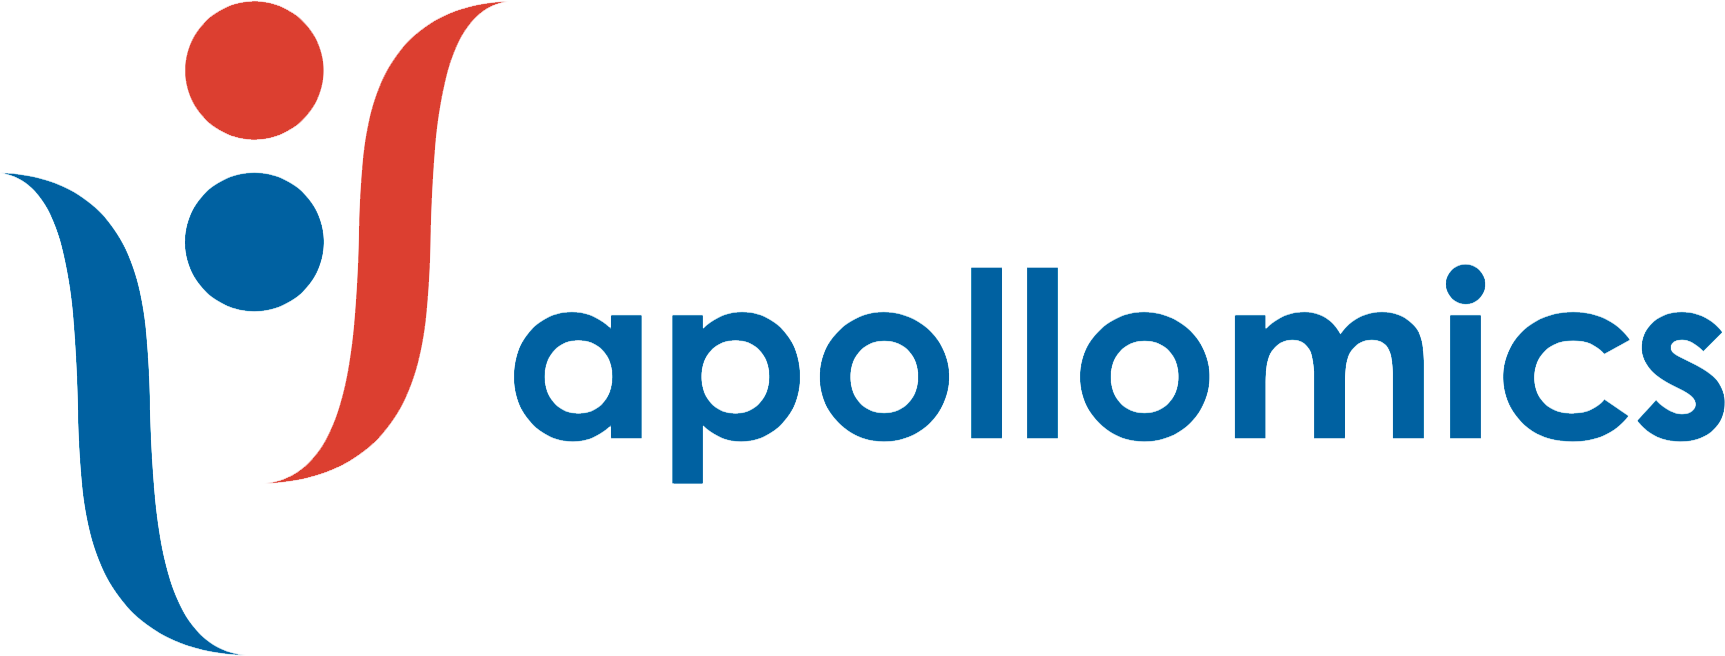 apollomics_logo.png